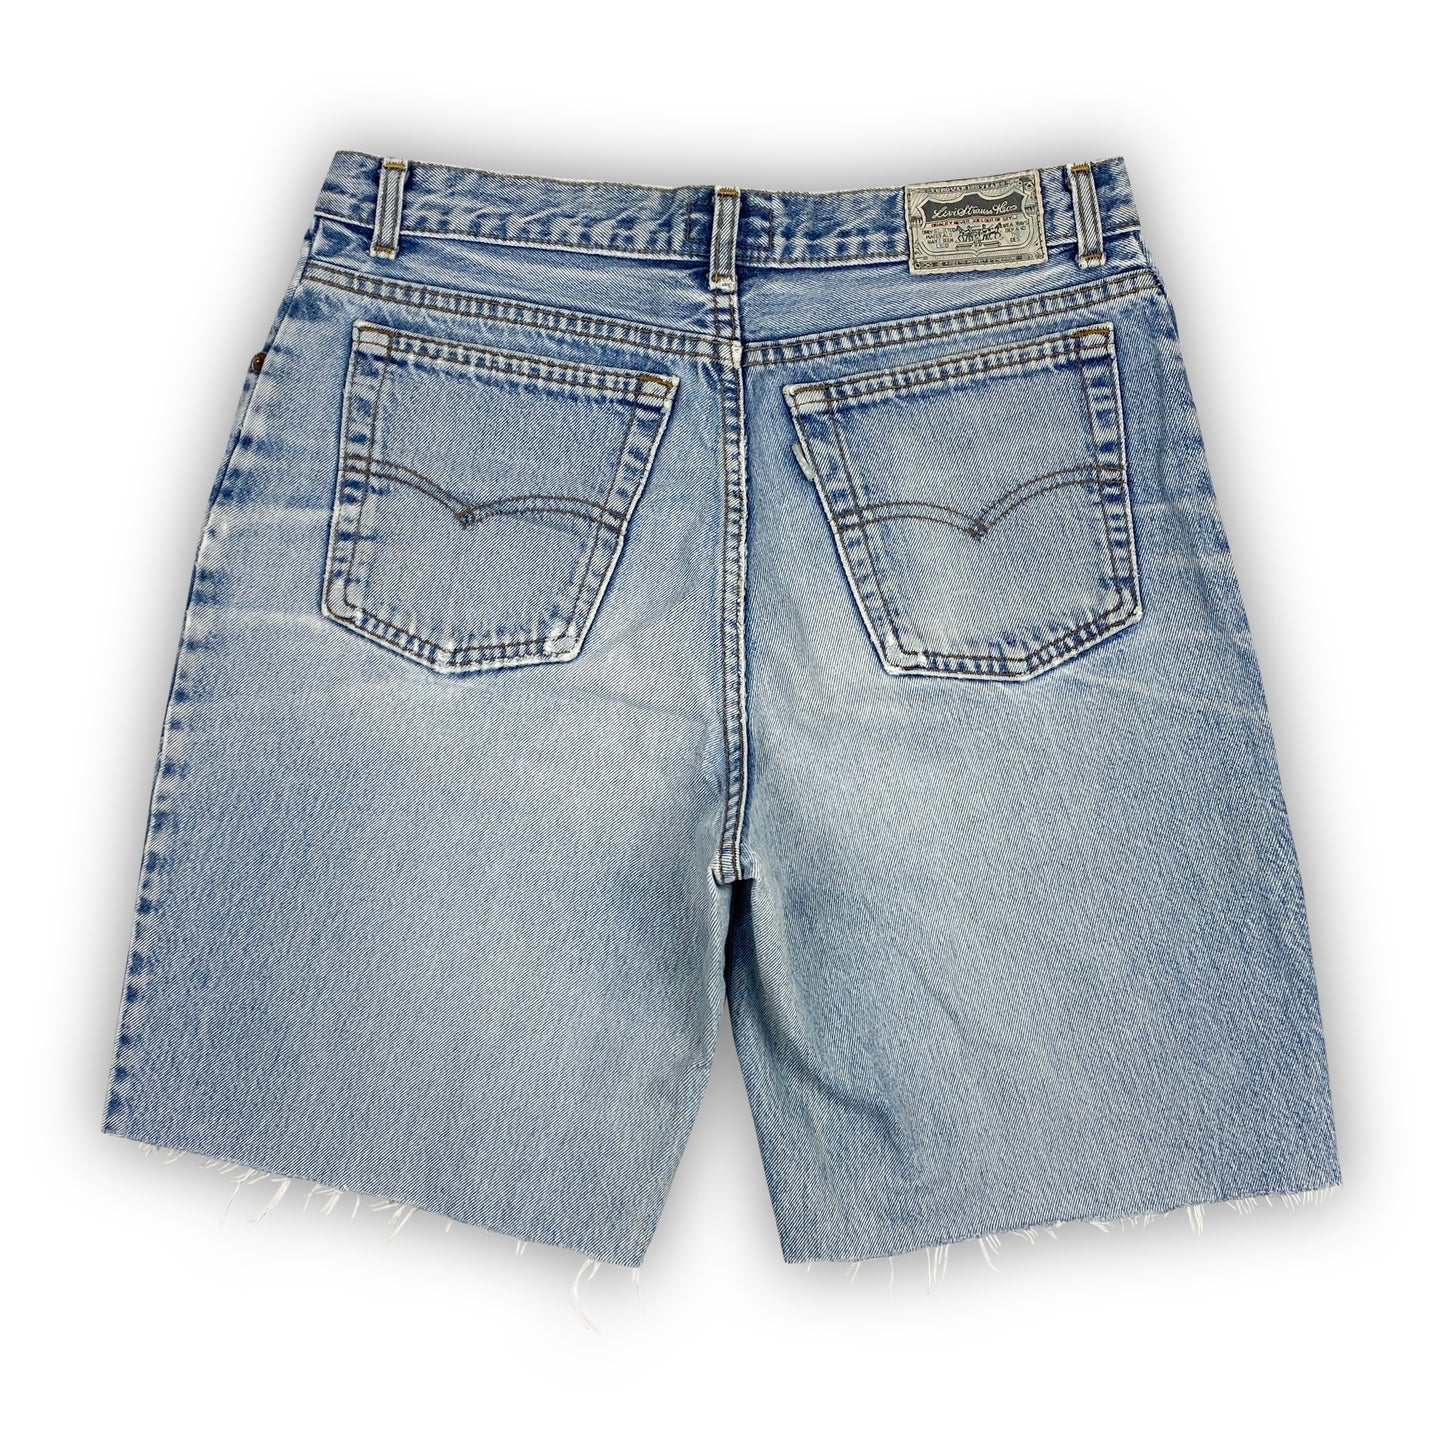 LEVIS Vintage Denim Shorts